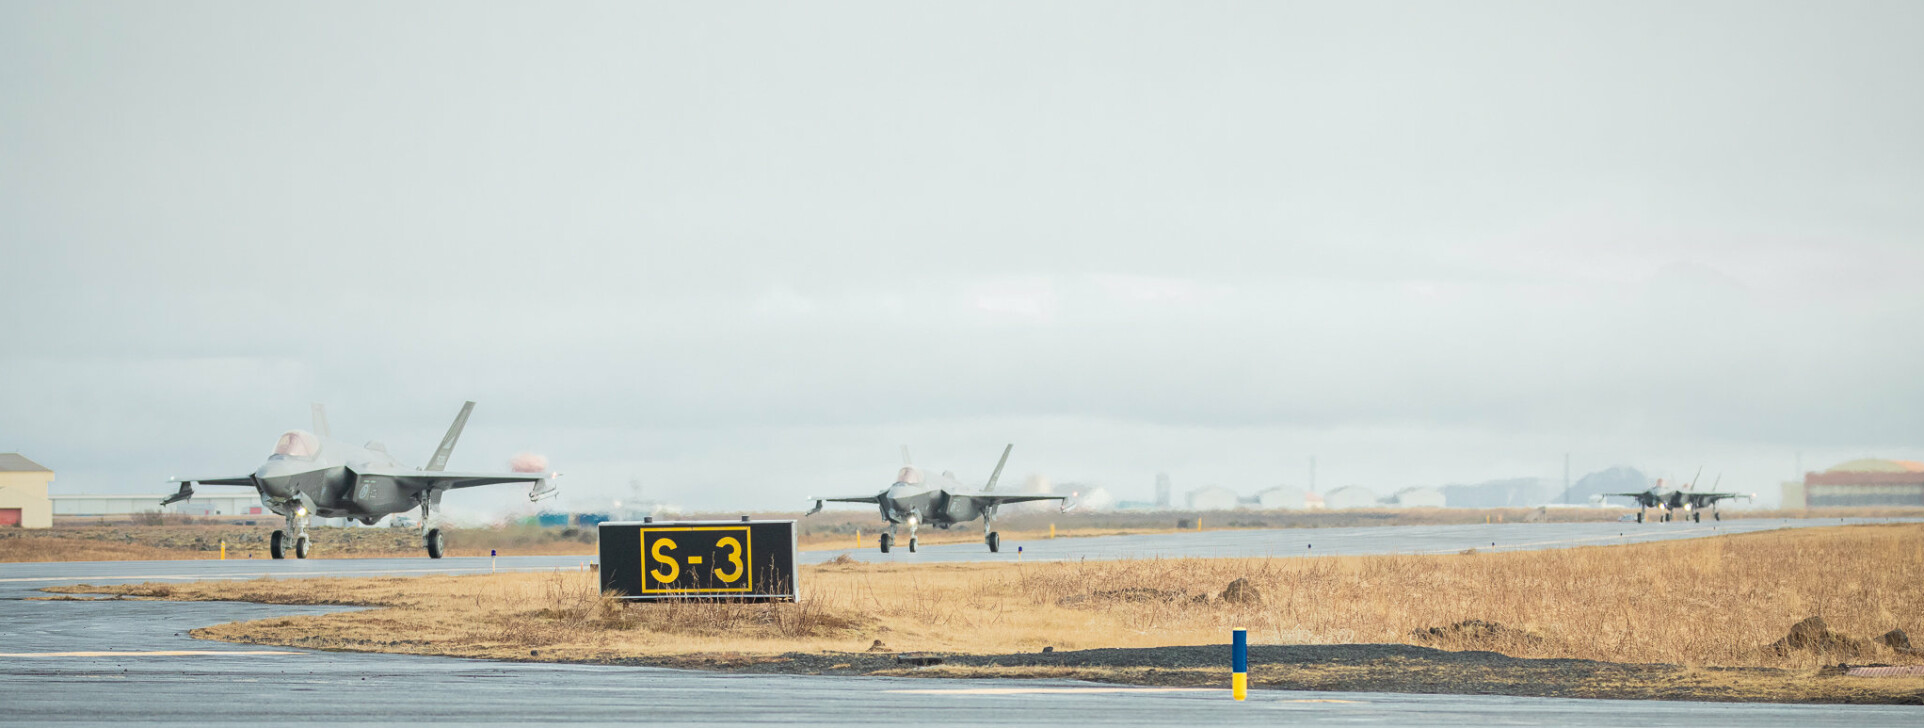 F-35 taxer på Keflavik international airport under oppdraget Icelandic Air Policing 2021. *** Local Caption *** F-35 after landing on Keflavik international airport during Icelandic Air Policing 2021.